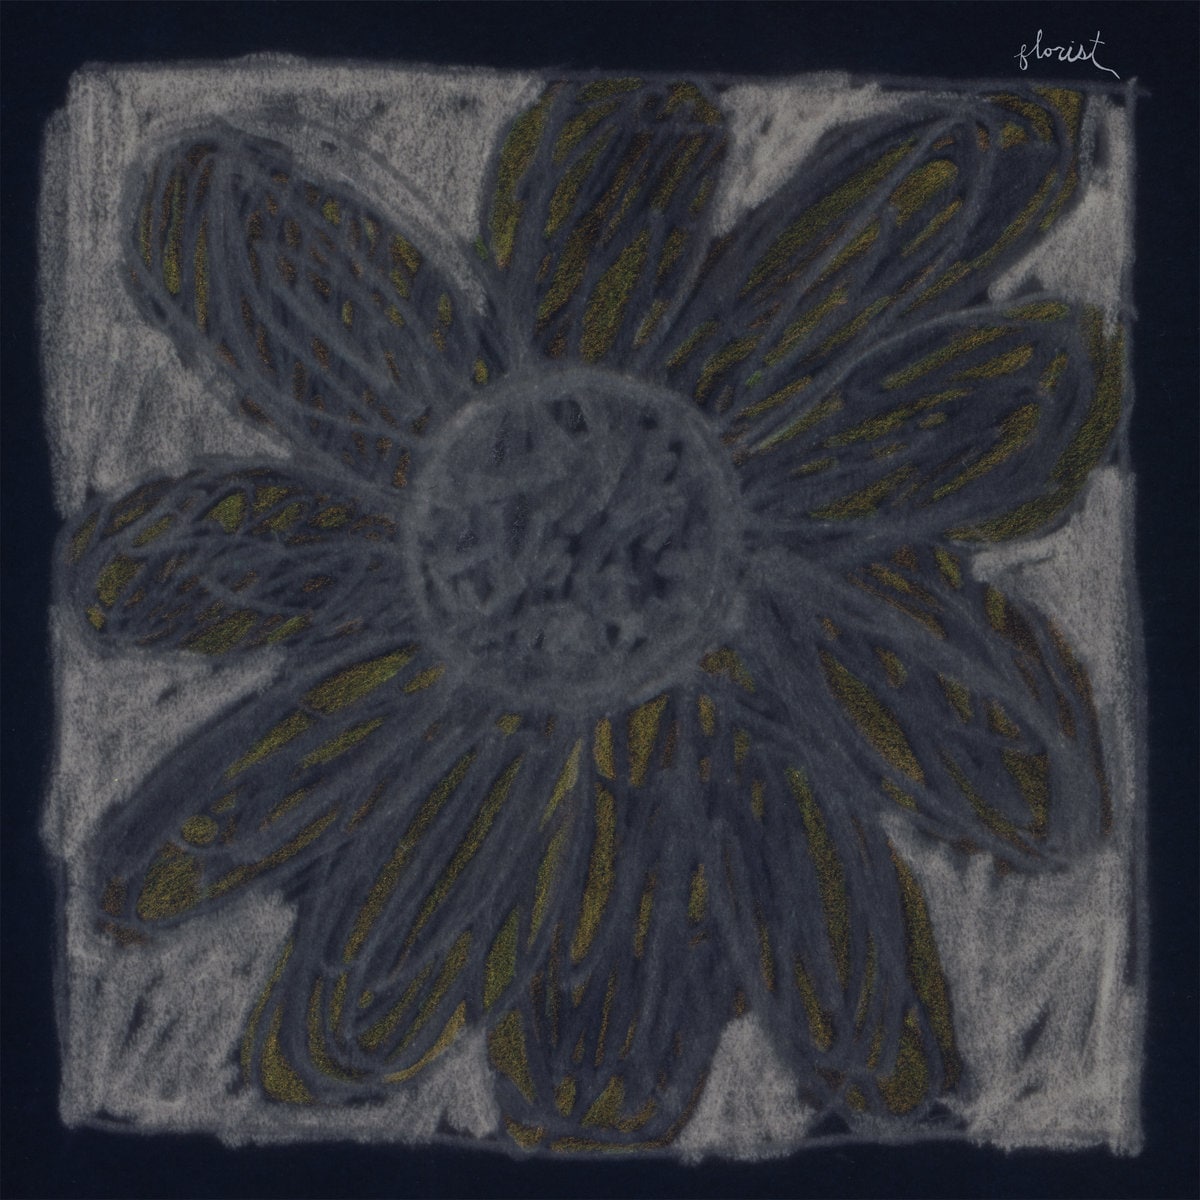 Florist — Florist cover artwork